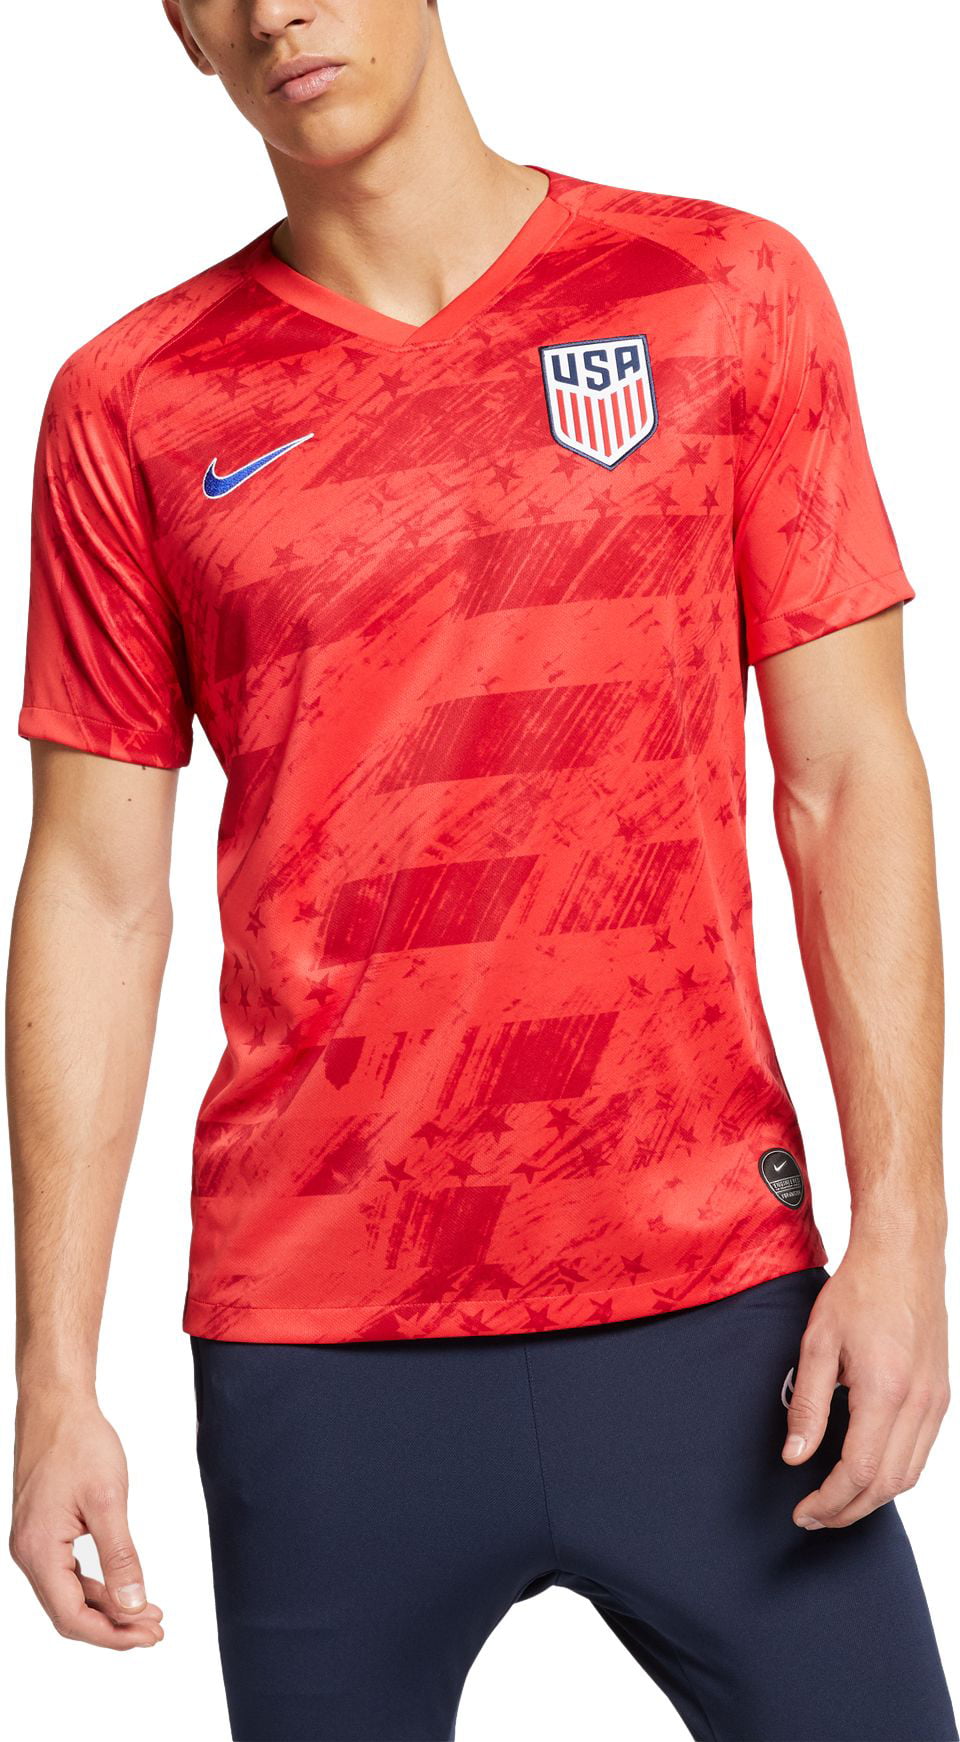 Nike Men's 2019 USA Soccer Breathe Away Replica Jersey - Walmart.com